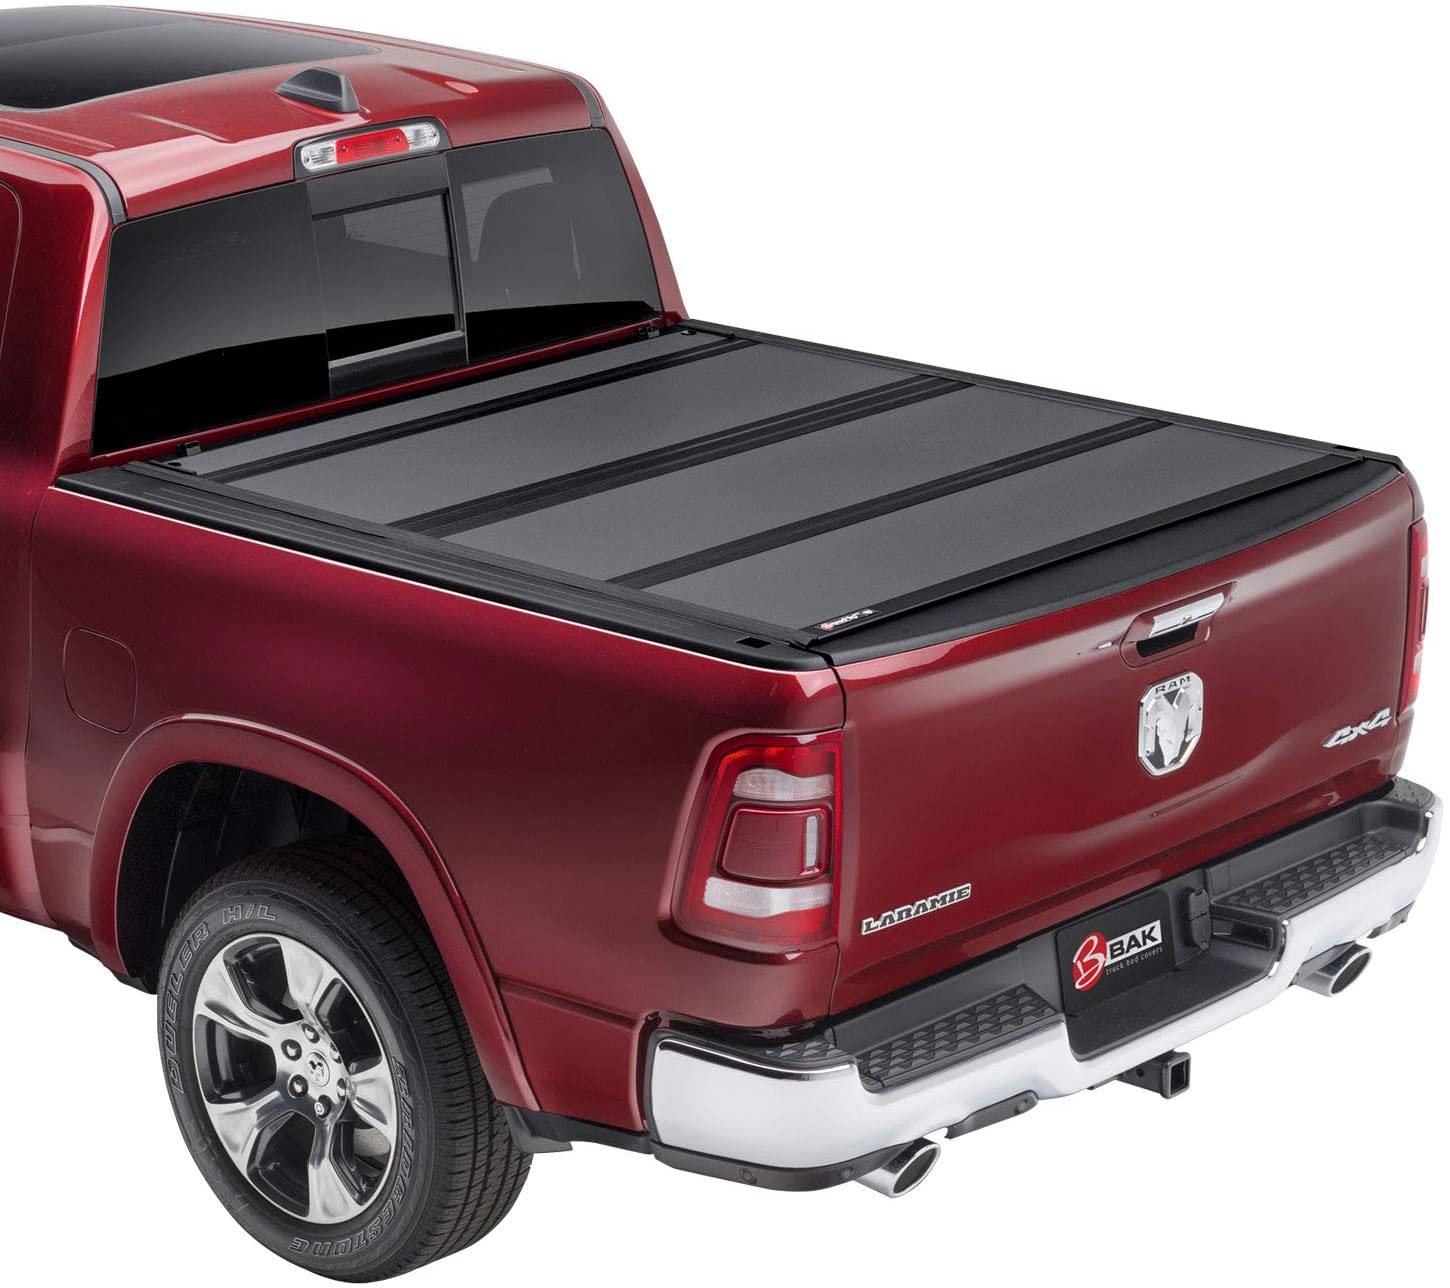 BAK BAKFlip MX4 Hard Folding Truck Bed Tonneau Cover | 448223 | Fits 2019-20 Dodge Ram 1500 6’4 2019 Dodge Ram 1500 Truck Bed Accessories